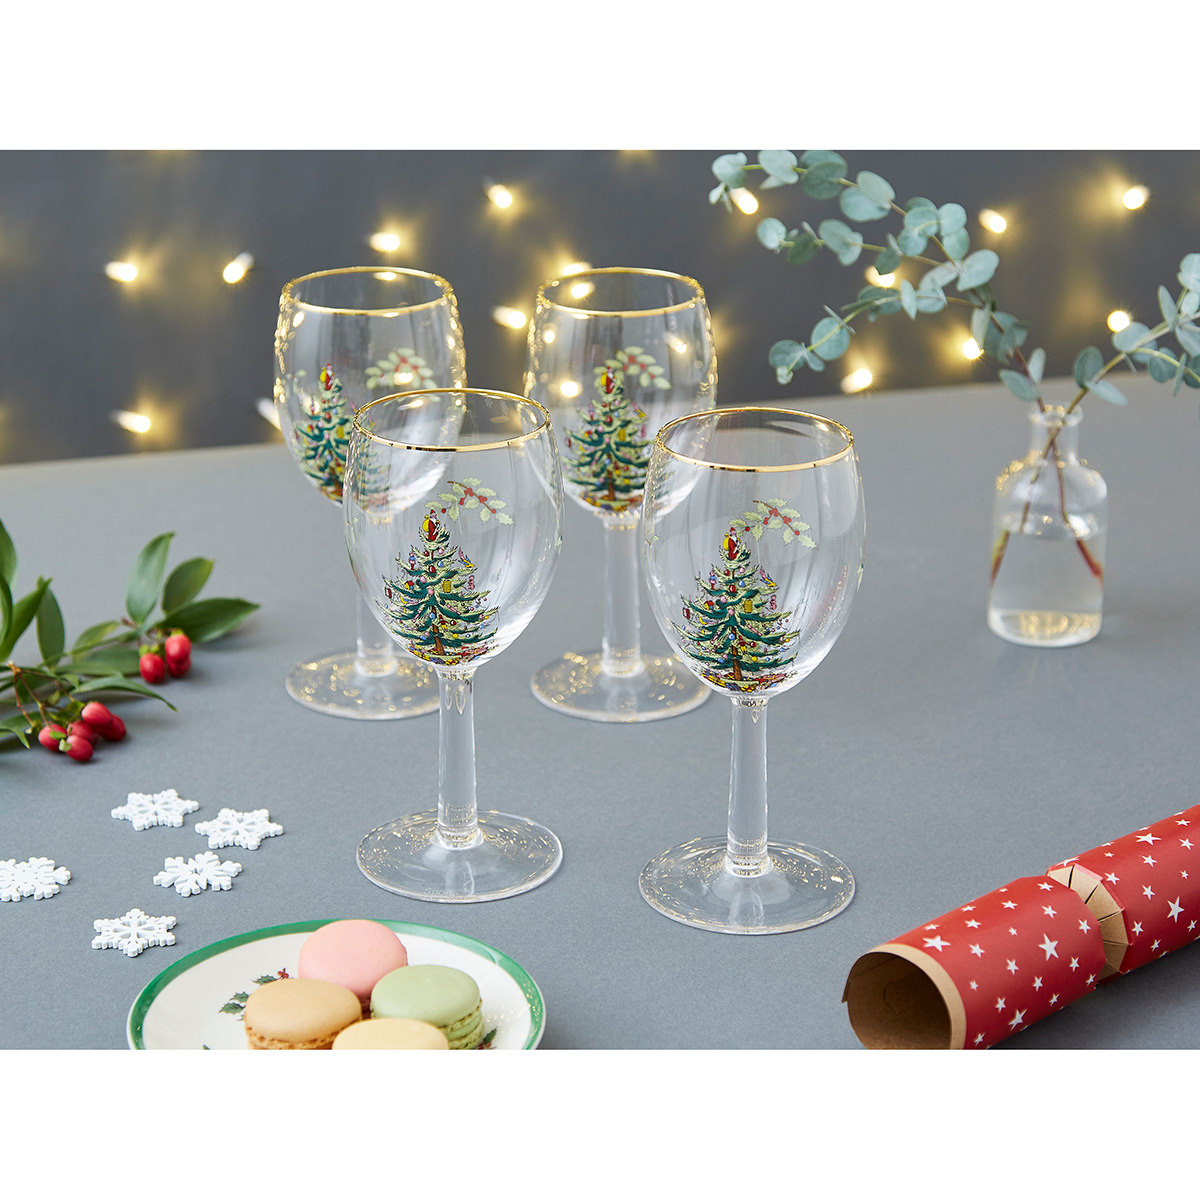 Spode Christmas Tree Glassware - Set of 4 -Made of  